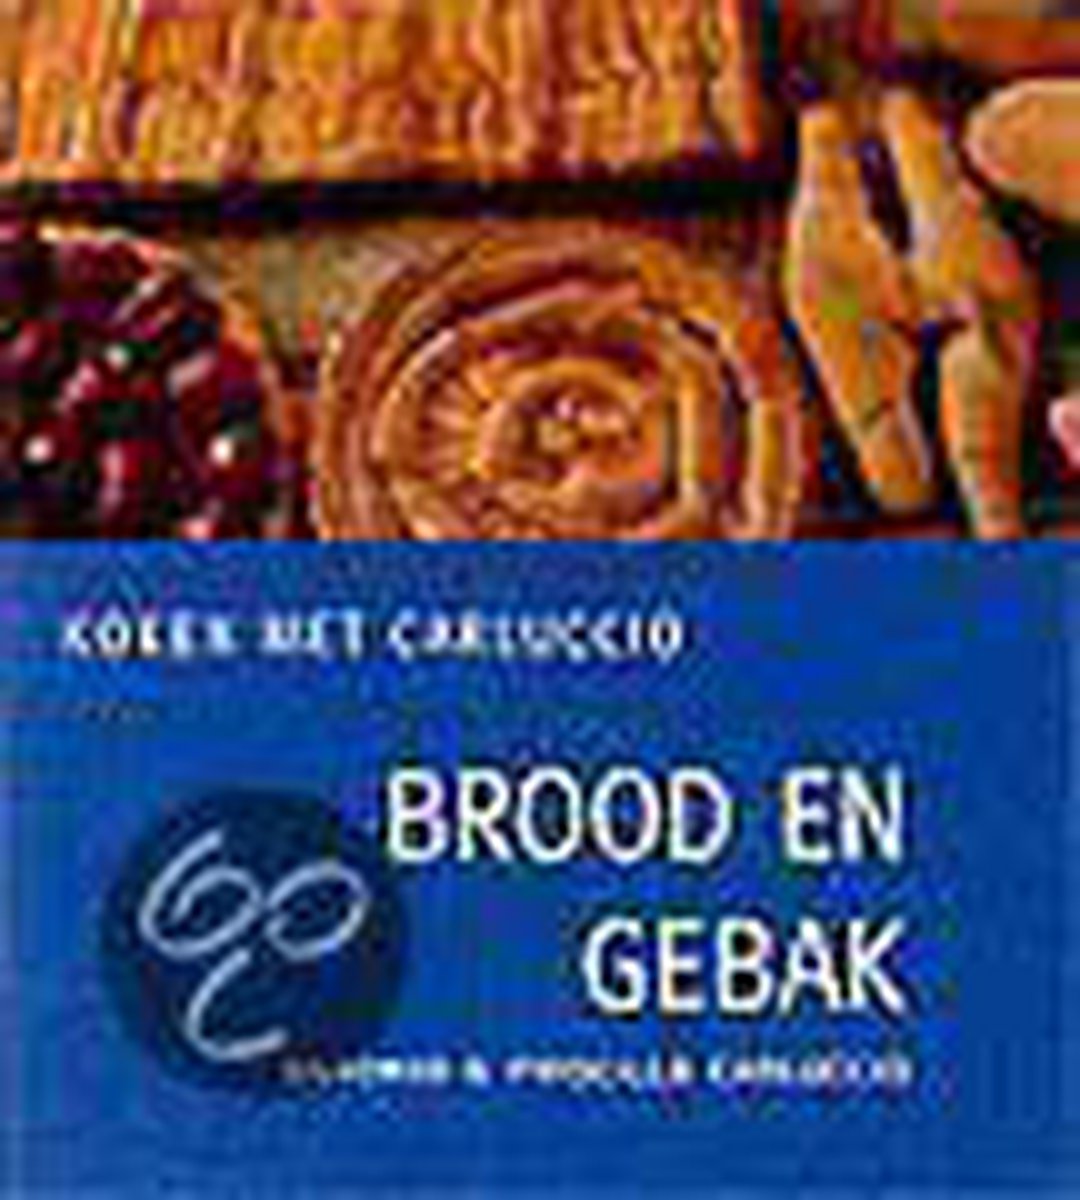 Brood en gebak / Koken met Carluccio